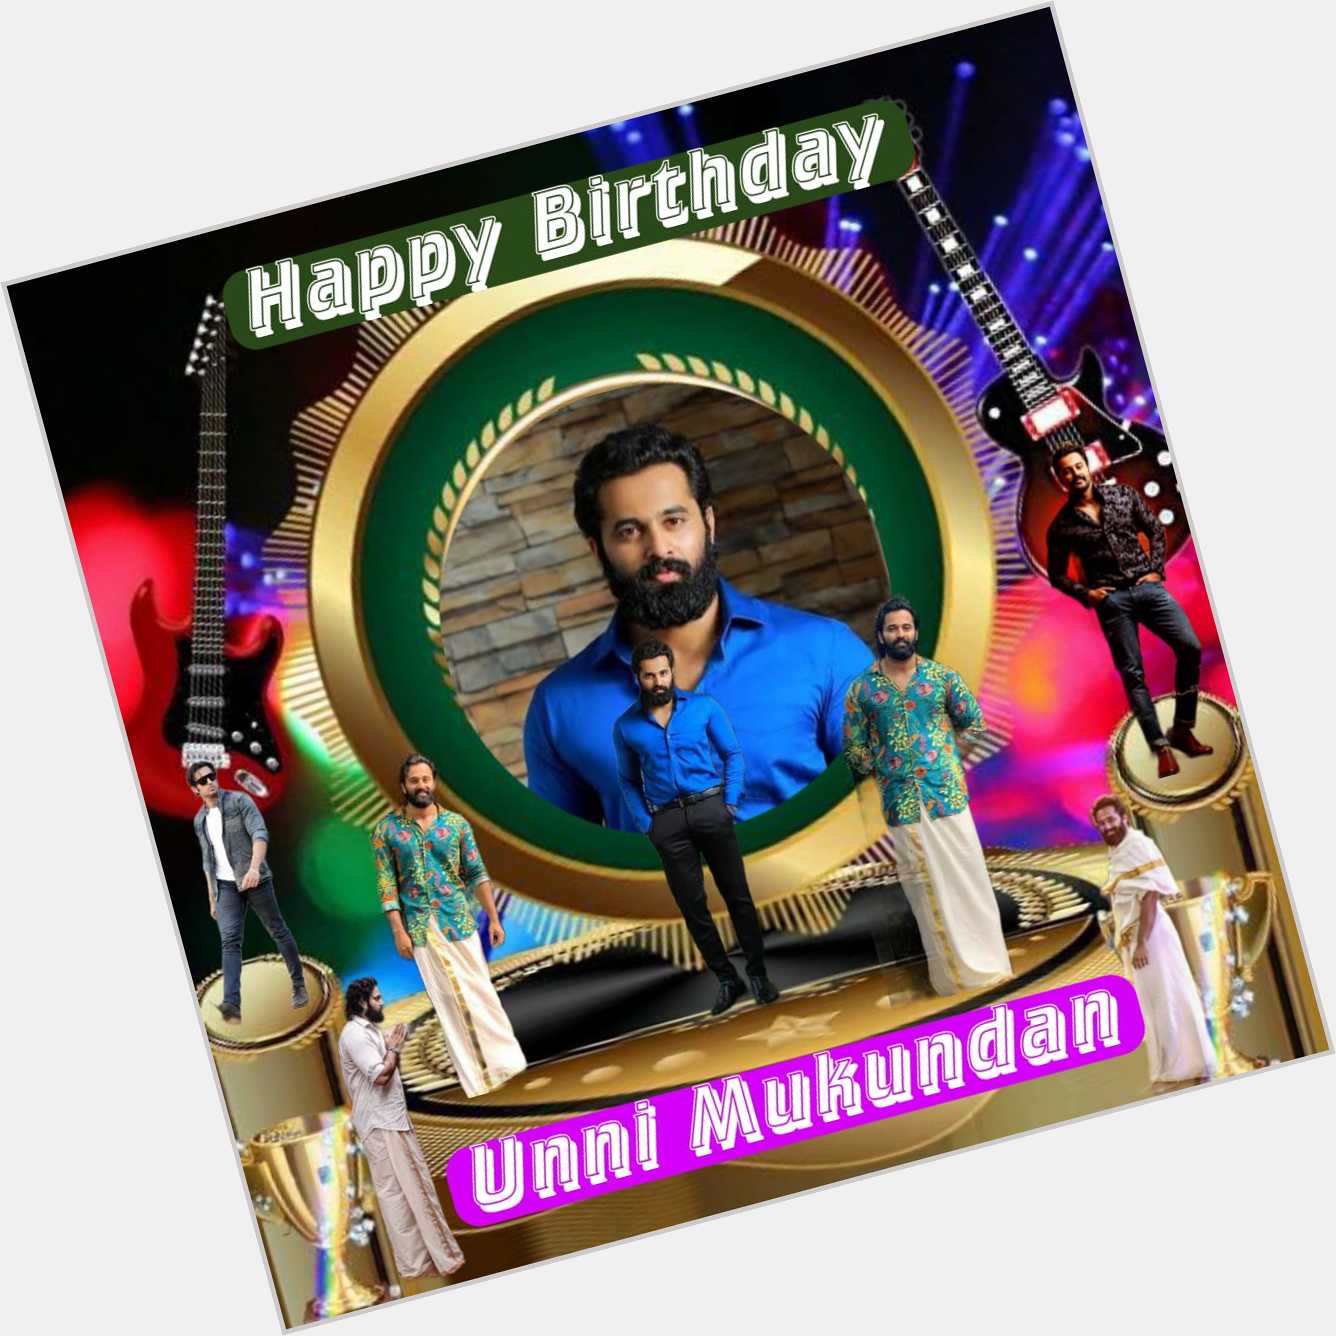 Happy Birthday Unni Mukundan   